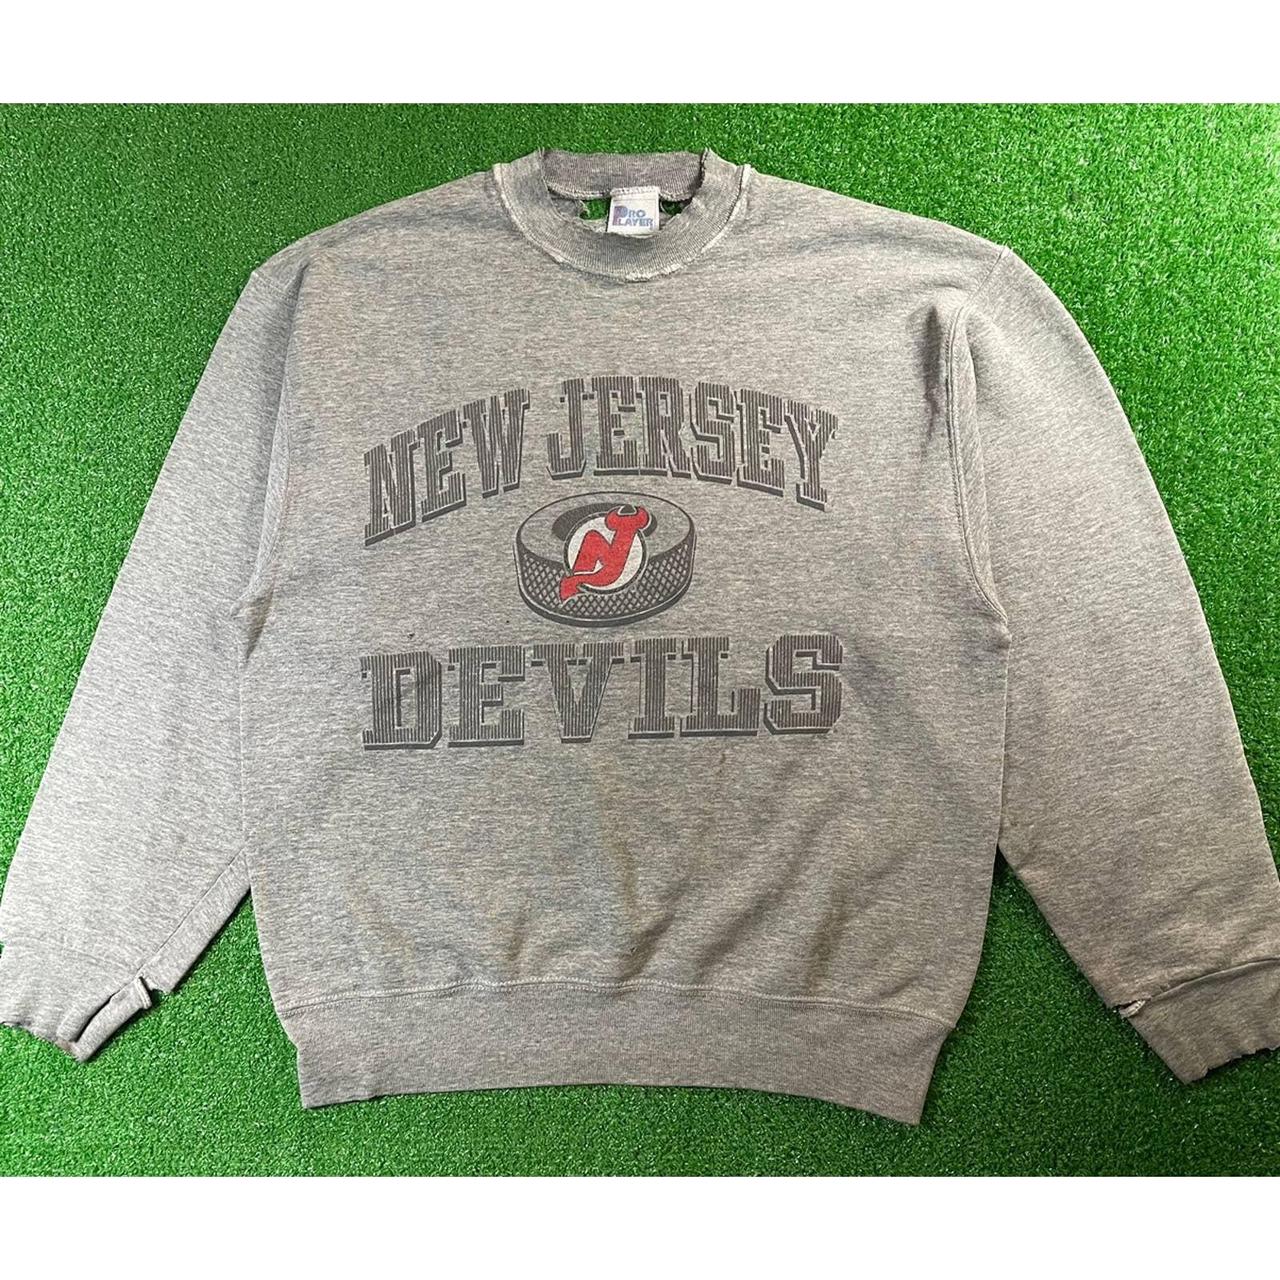 New Jersey Devils - Pro Sweatshirts